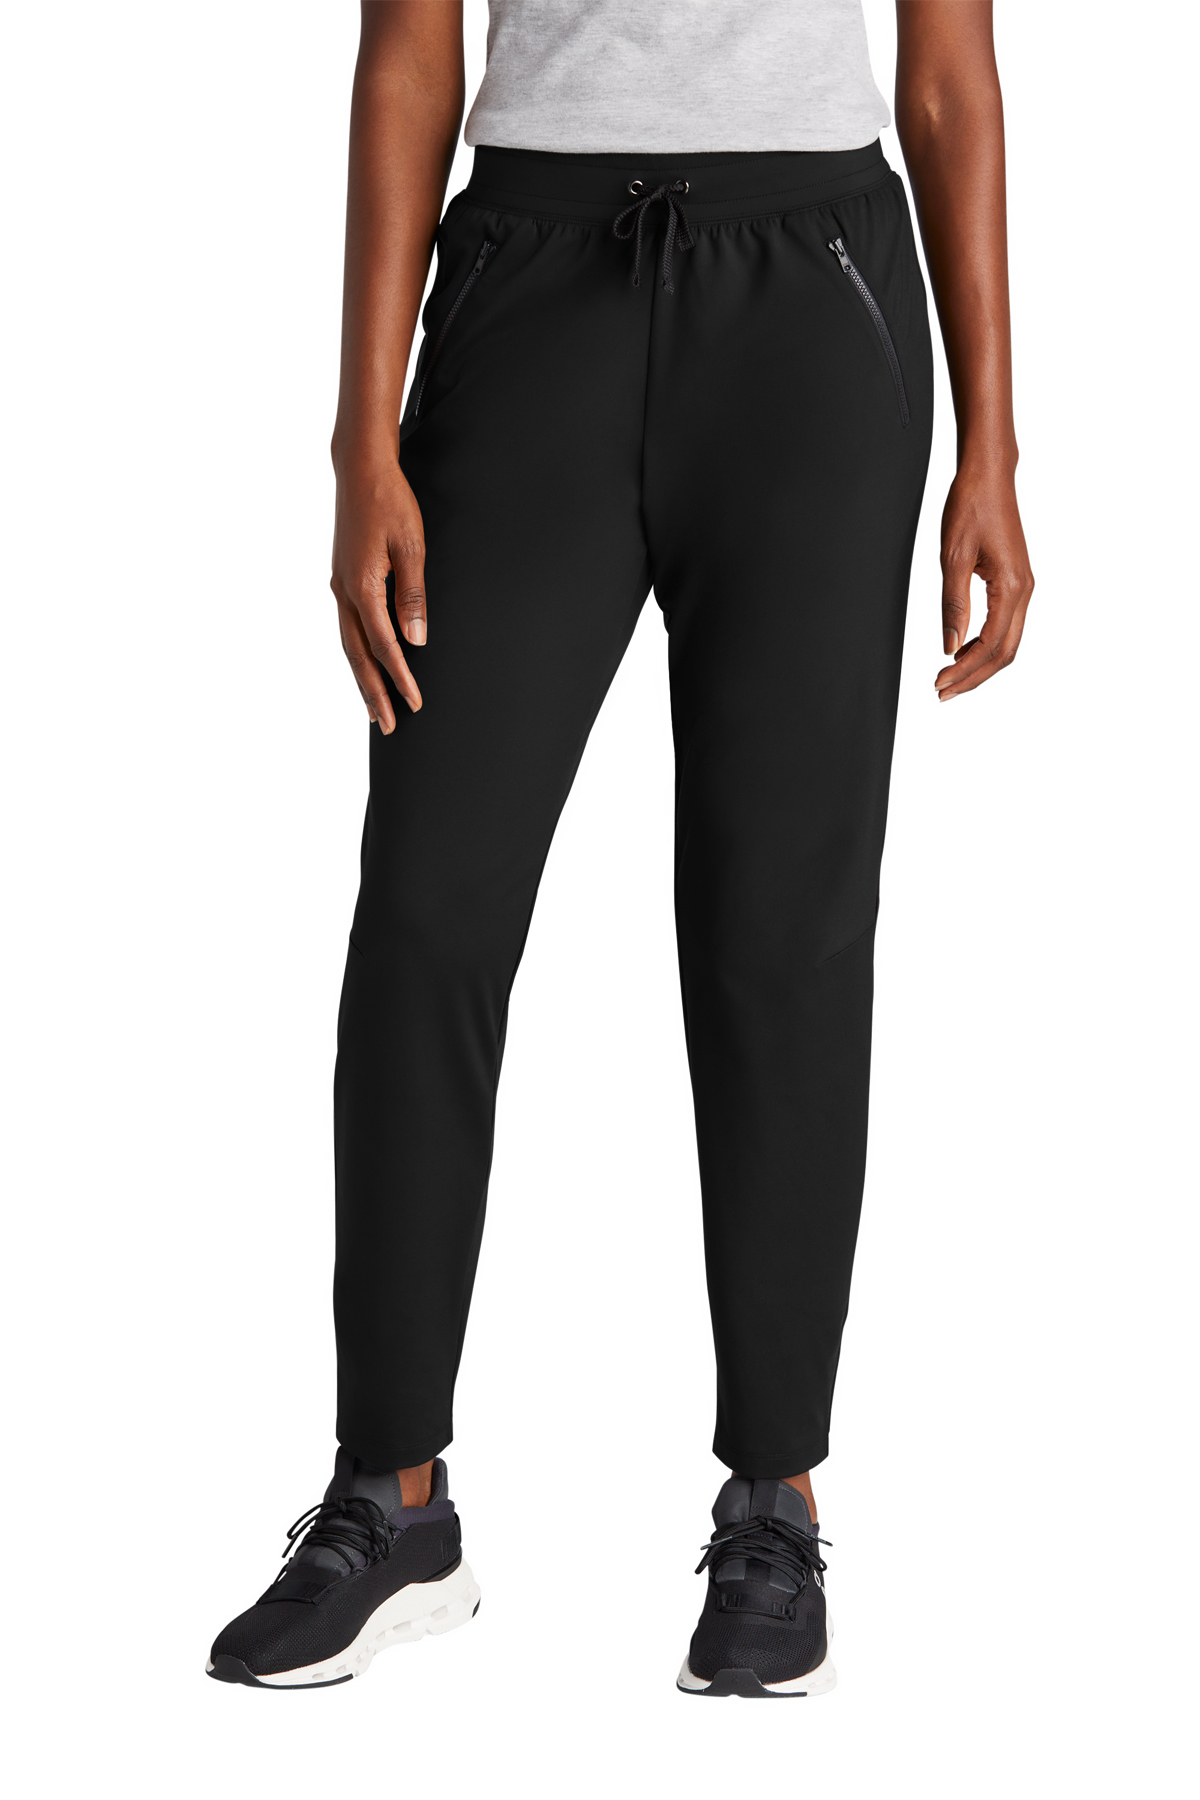 Black Daba jogger trousers, Women's sports trousers